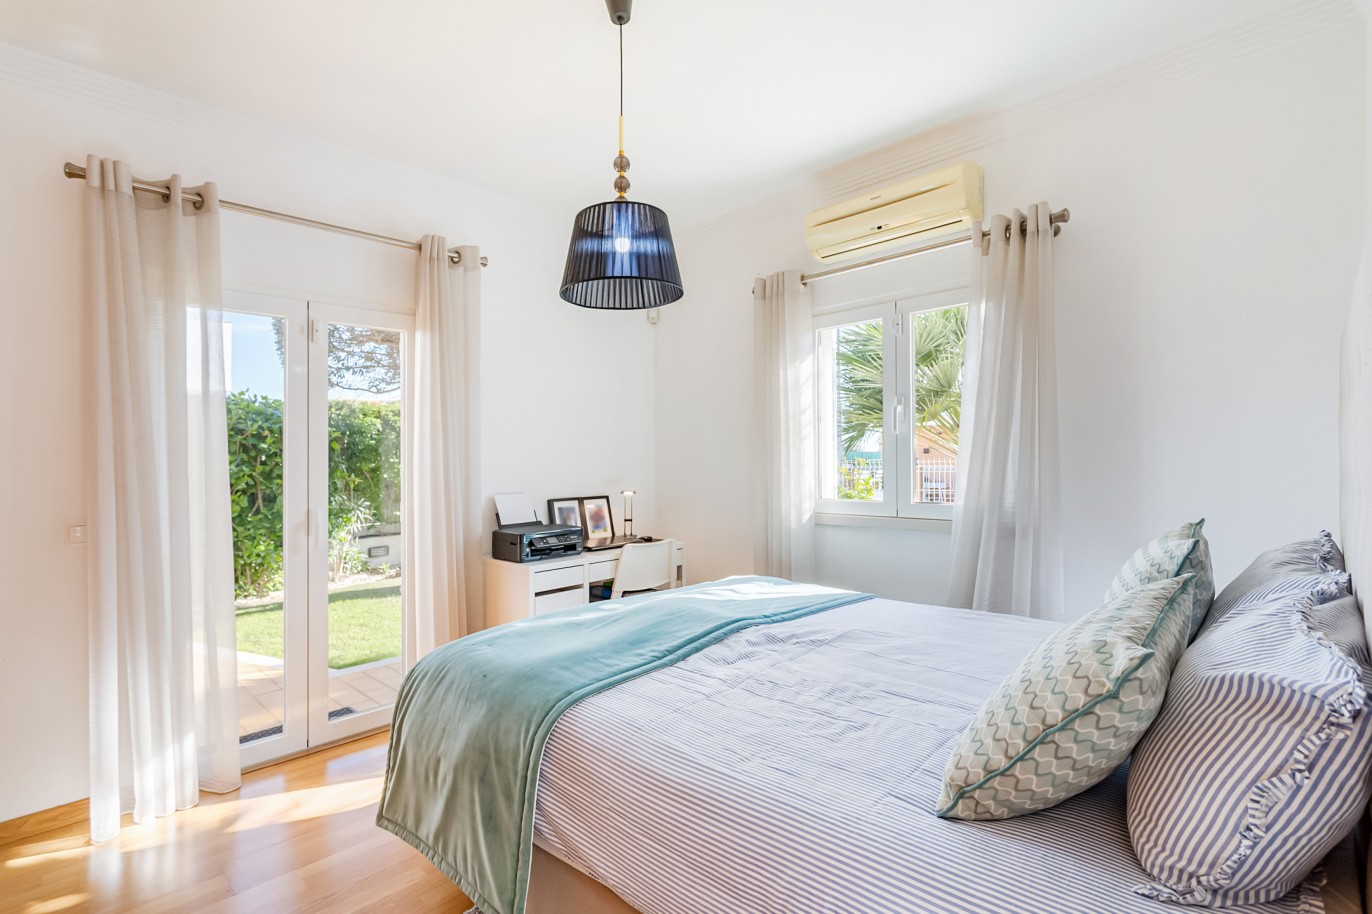 4 bedroom detached villa with pool for sale in Albufeira, Algarve_214366